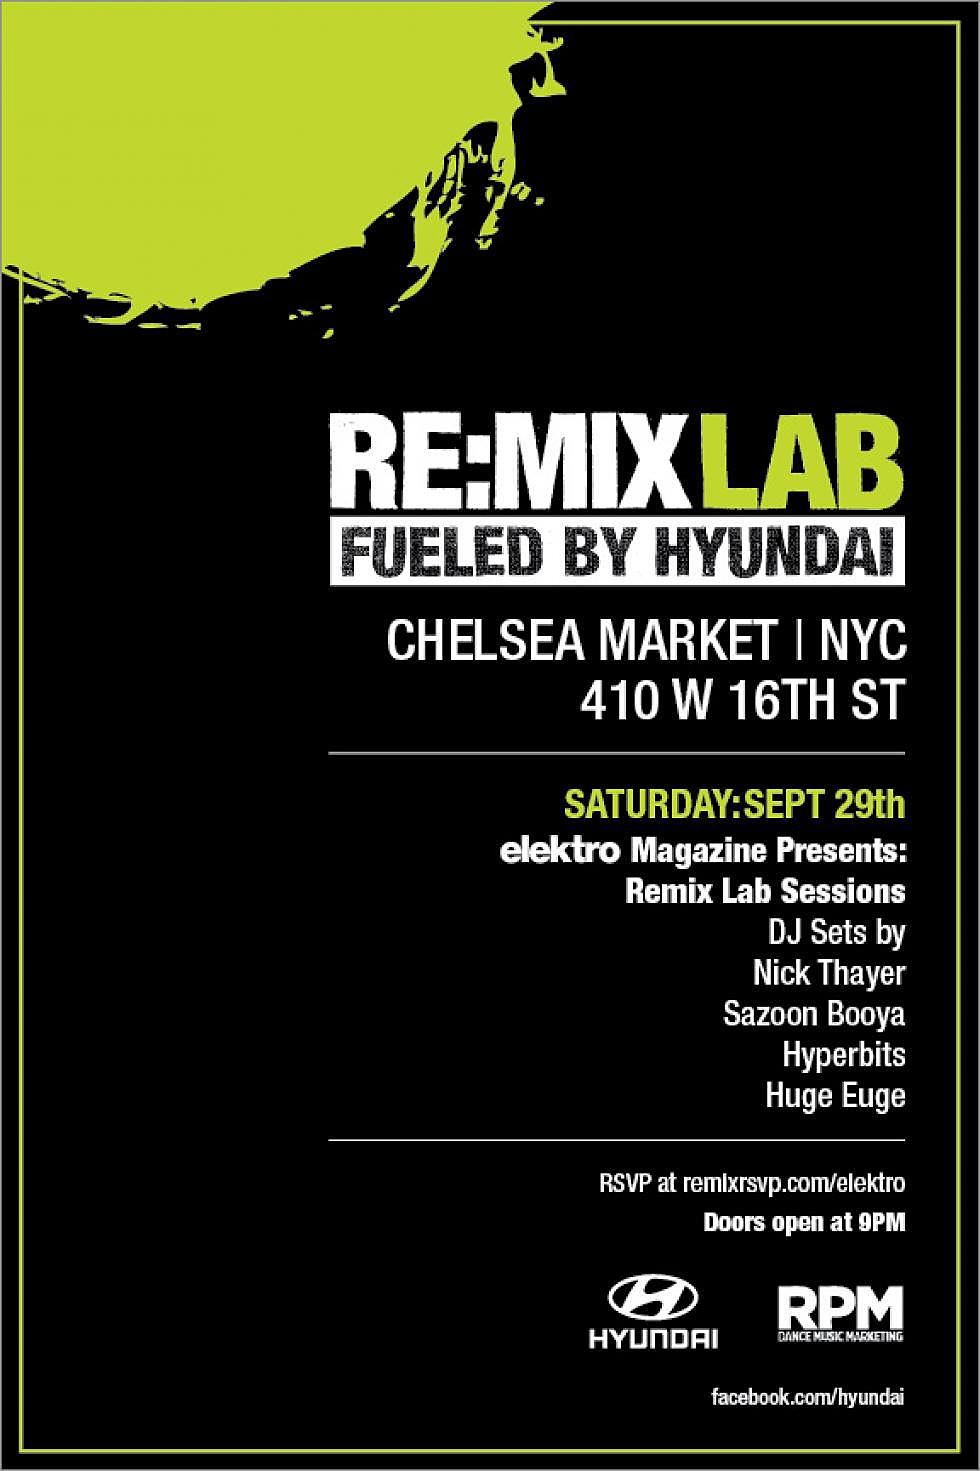 elektro Magazine Presents: Remix Lab Sessions w/ Nick Thayer, Sazon Booya &#038; More